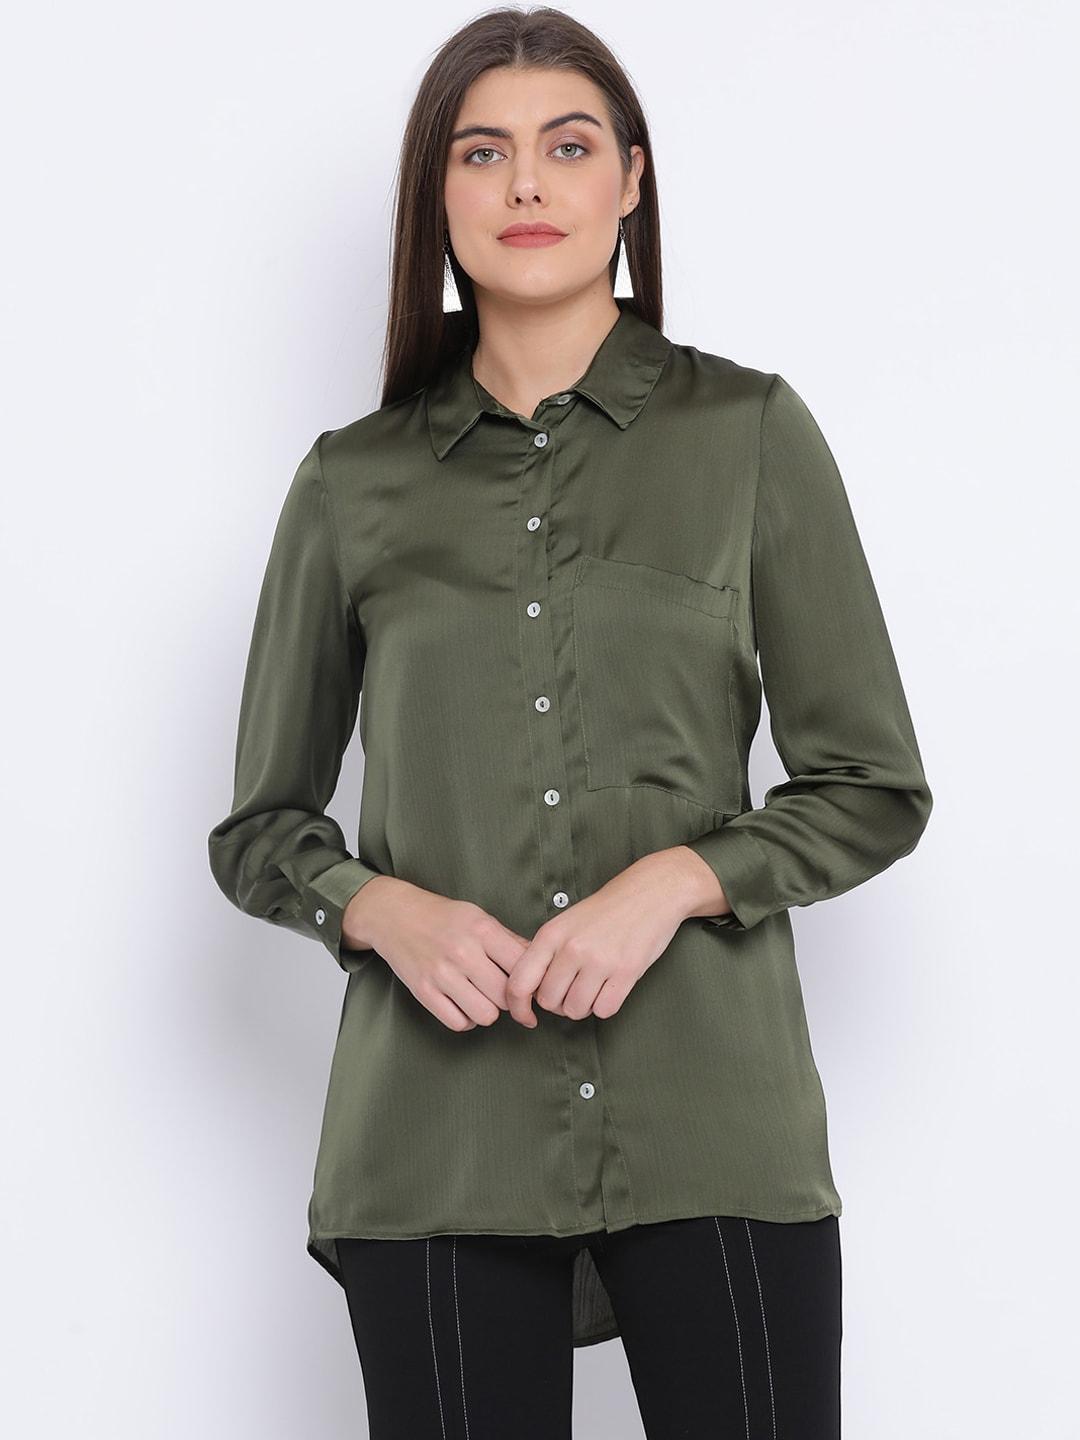 oxolloxo women green regular fit solid casual shirt